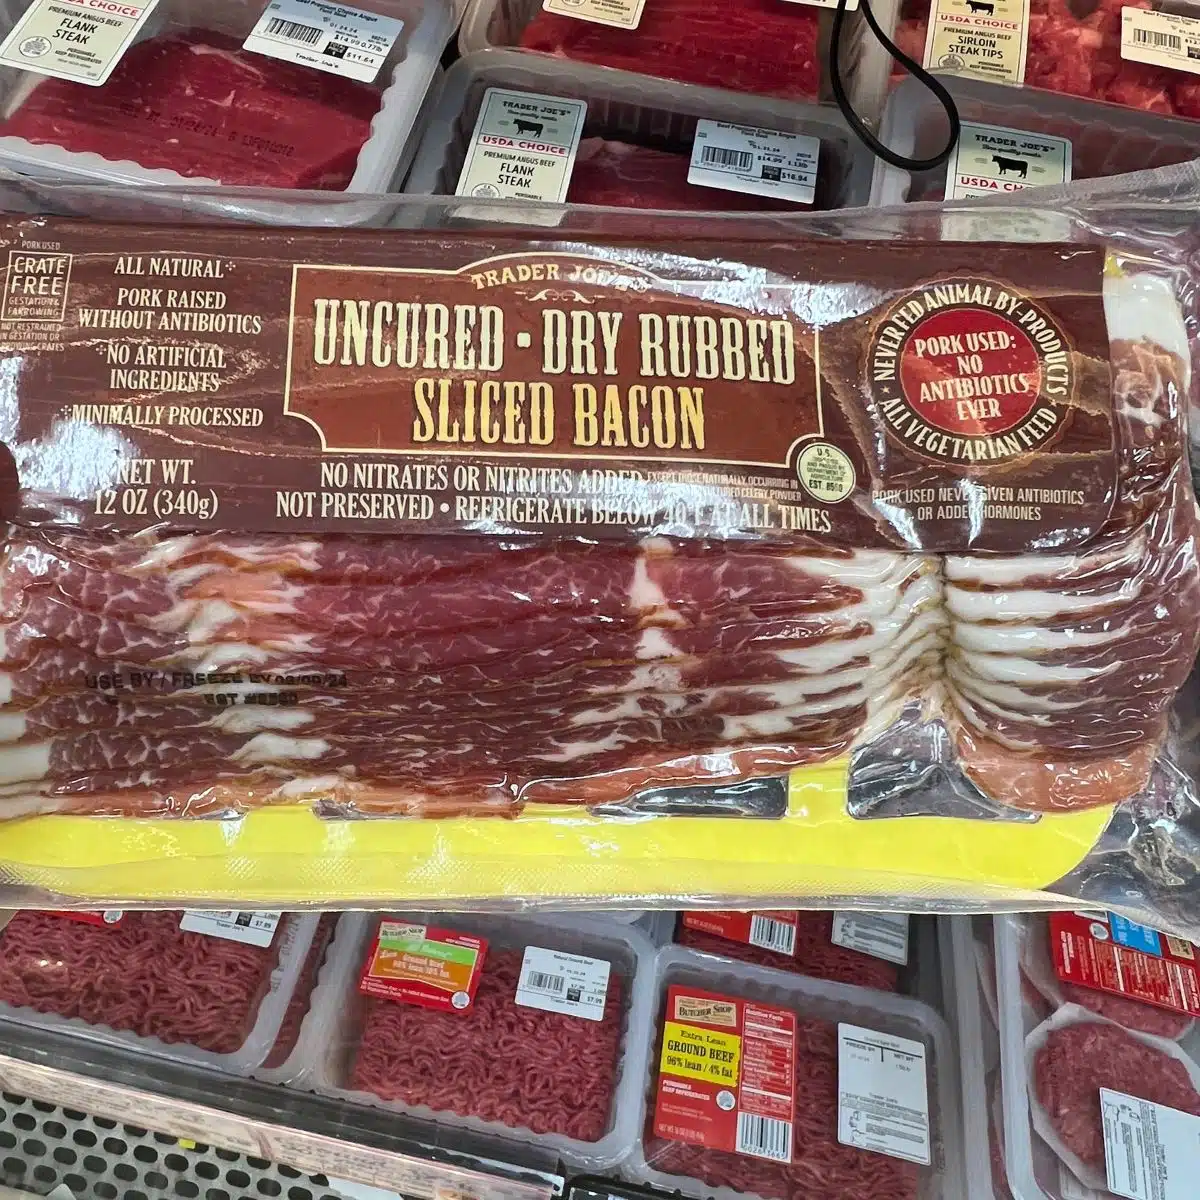 Trader Joe's uncured bacon.